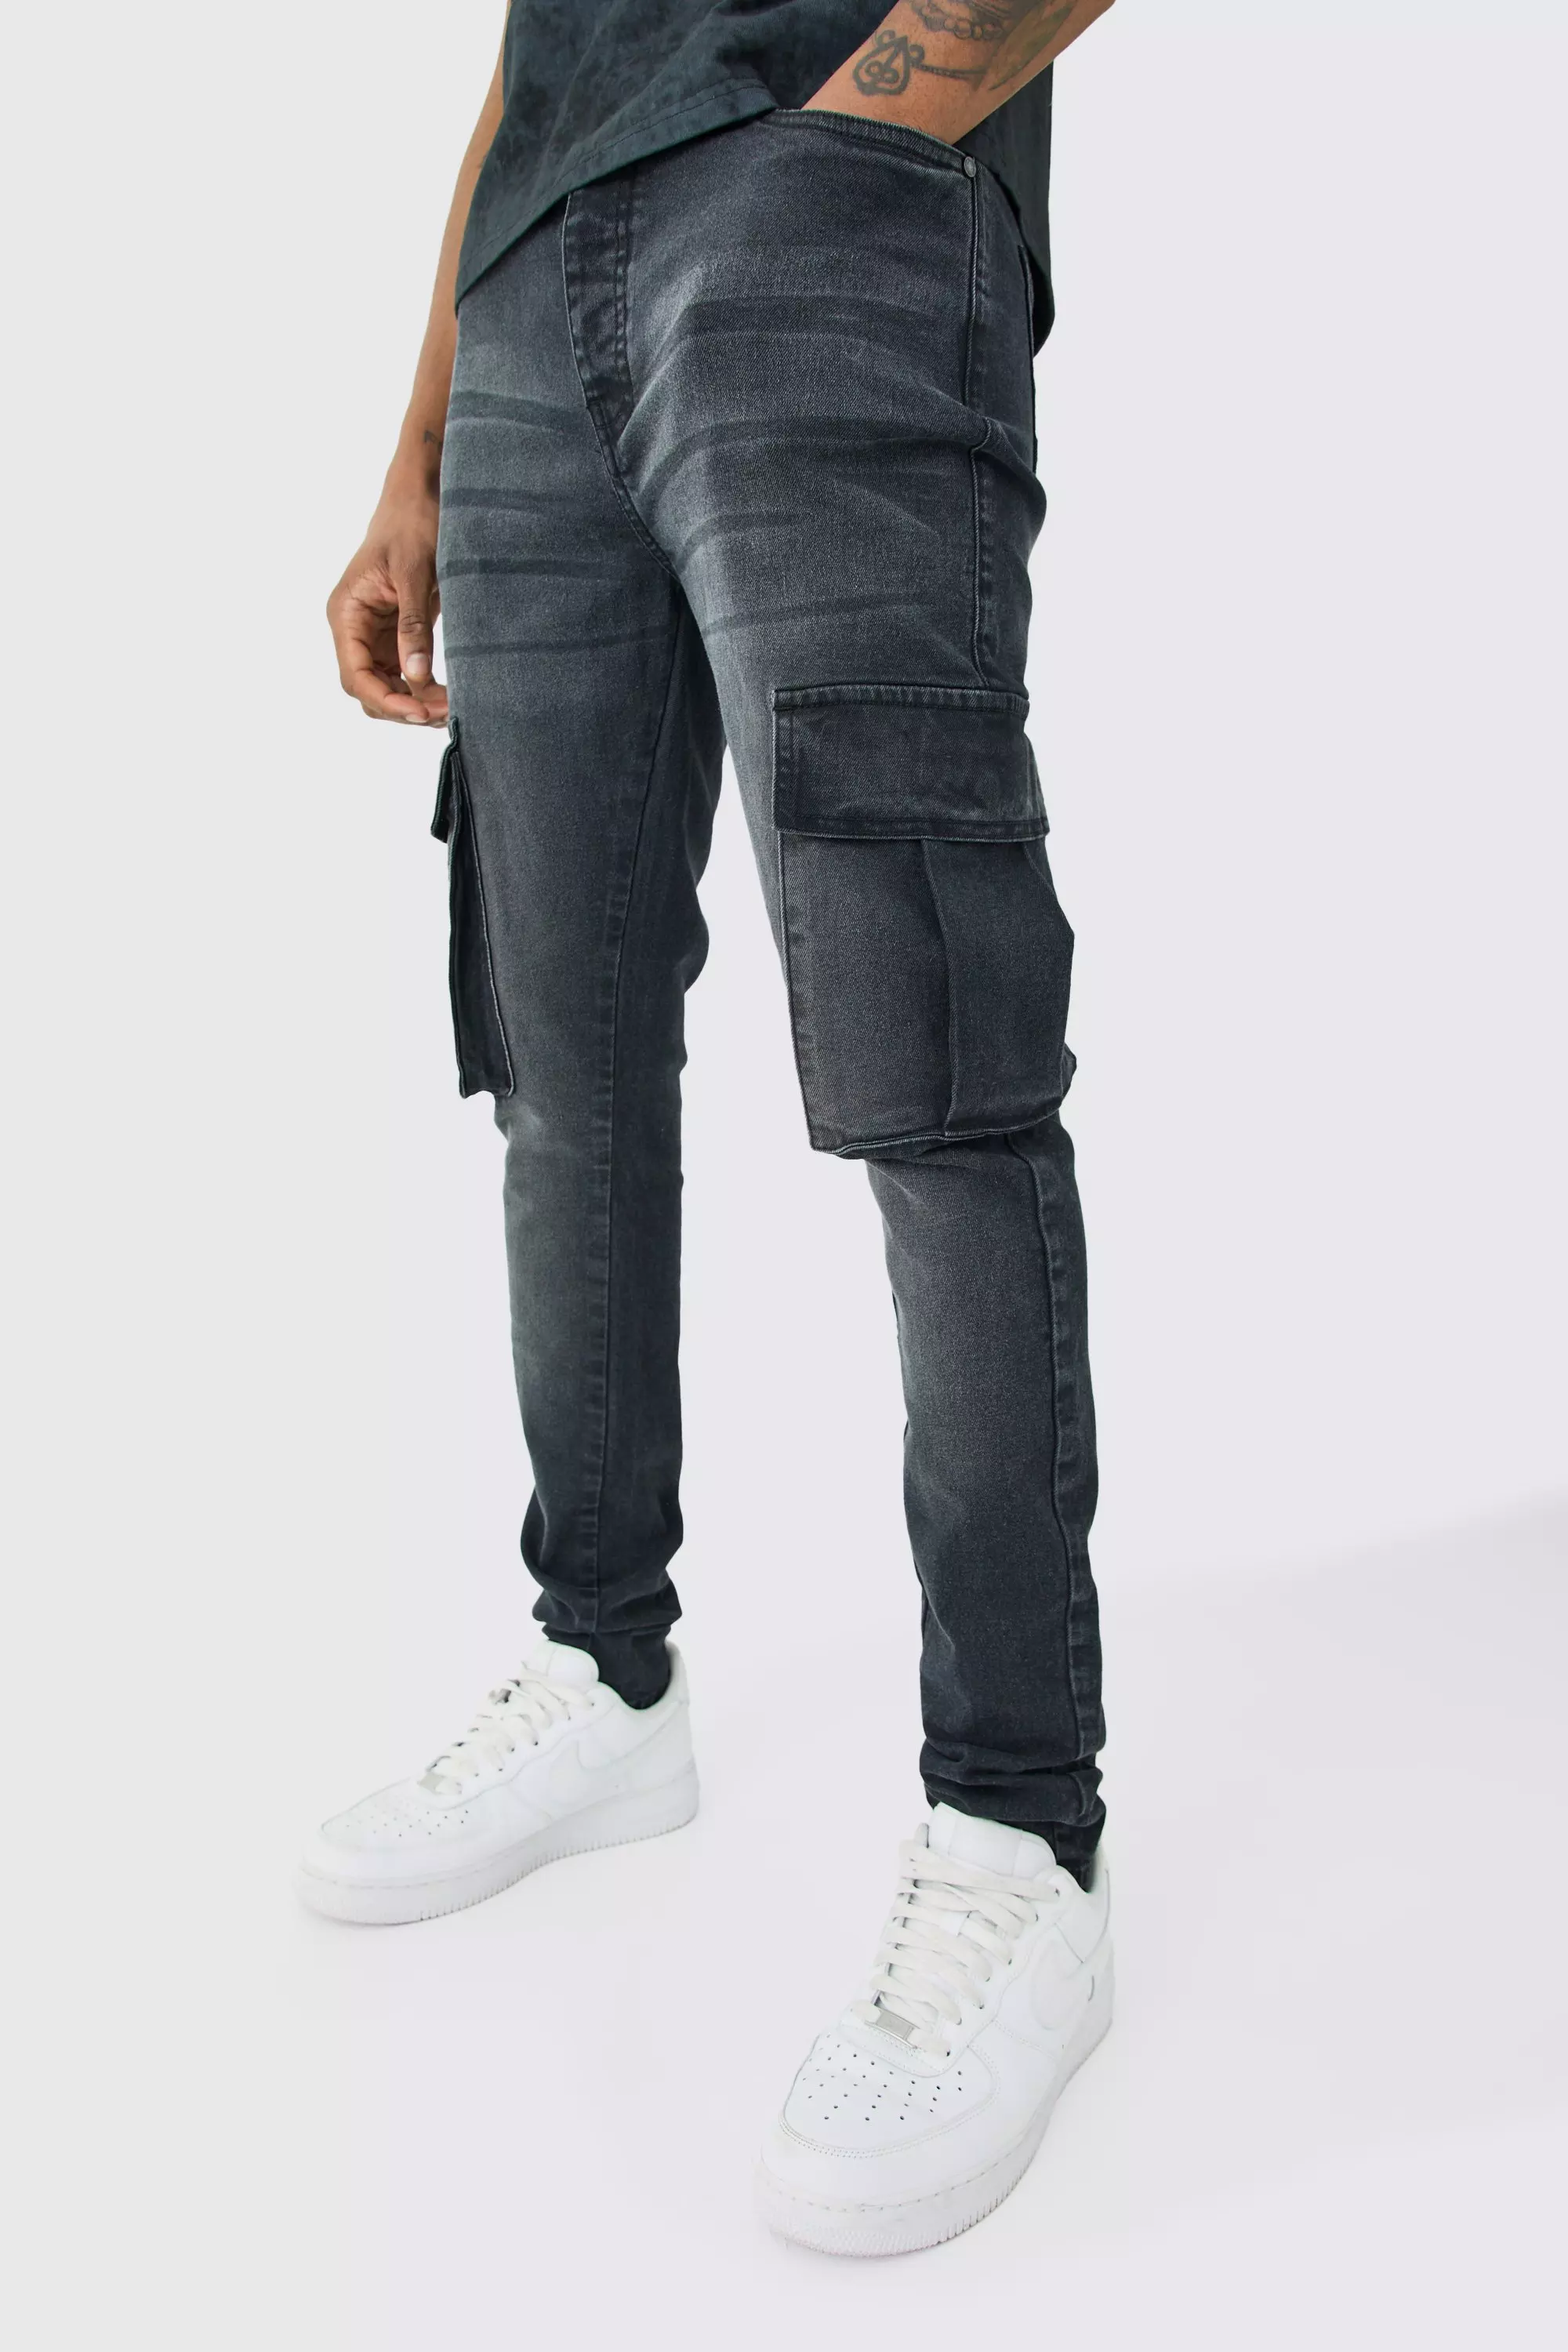 Ash Grey Tall Super Skinny Cargo Jeans